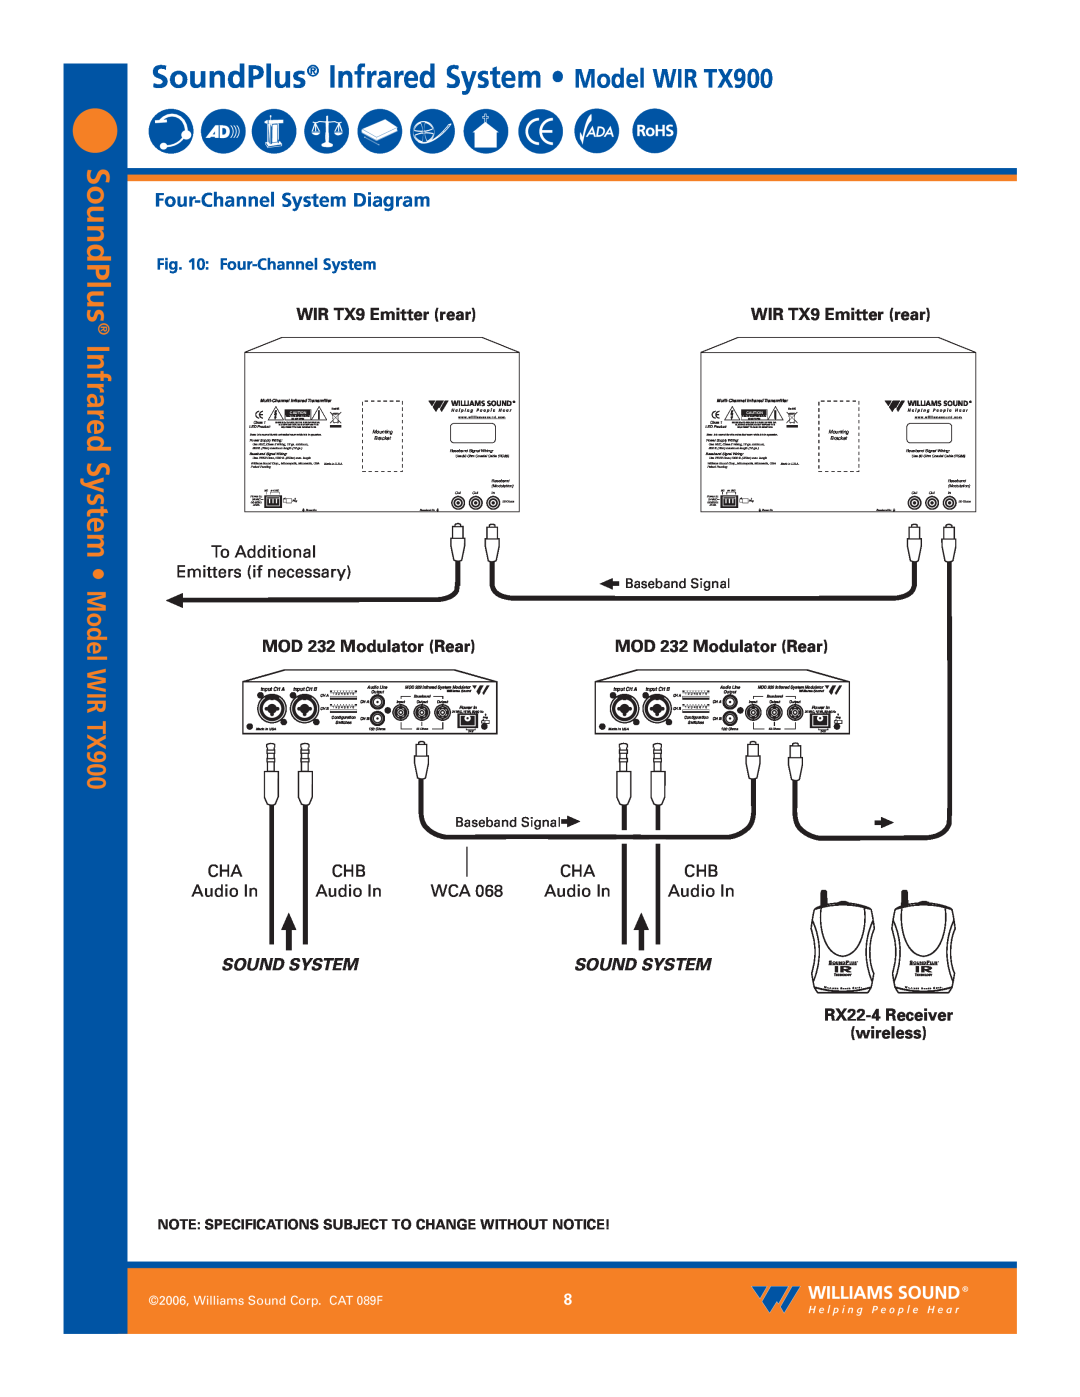 Williams Sound WIRTX900 SoundPlus Infrared System, WIR TX900, Four-Channel System Diagram, WIR TX9 Emitter rear, Model 